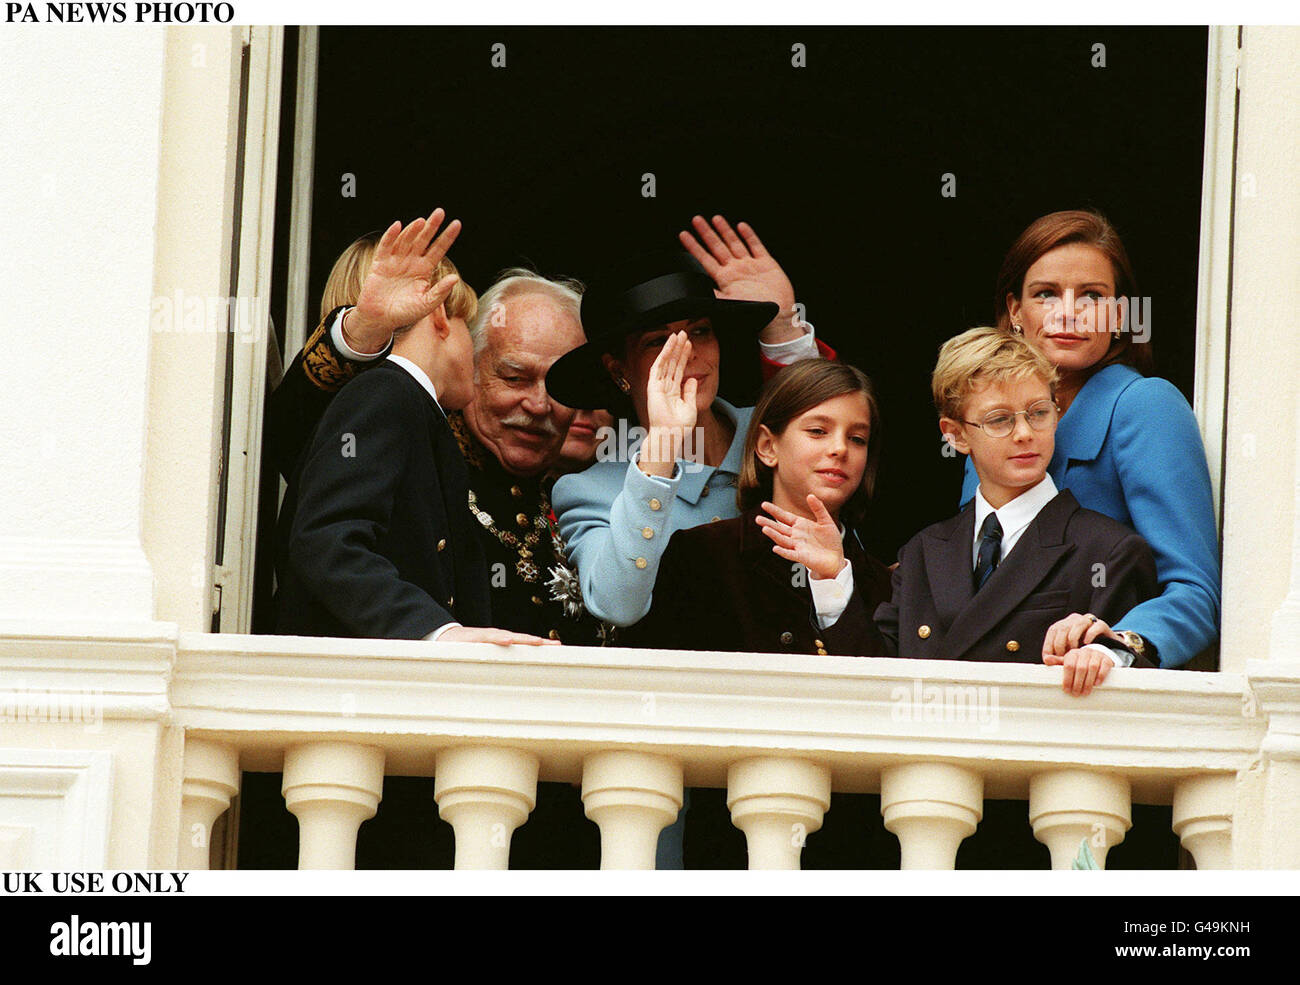 PA NEWS PHOTO : 19/11/97: UK USE ONLY Prince Rainier with Princess Caroline and Princess Stephanie 19 November in Monaco during Monaco National day ceremonies. Stock Photo